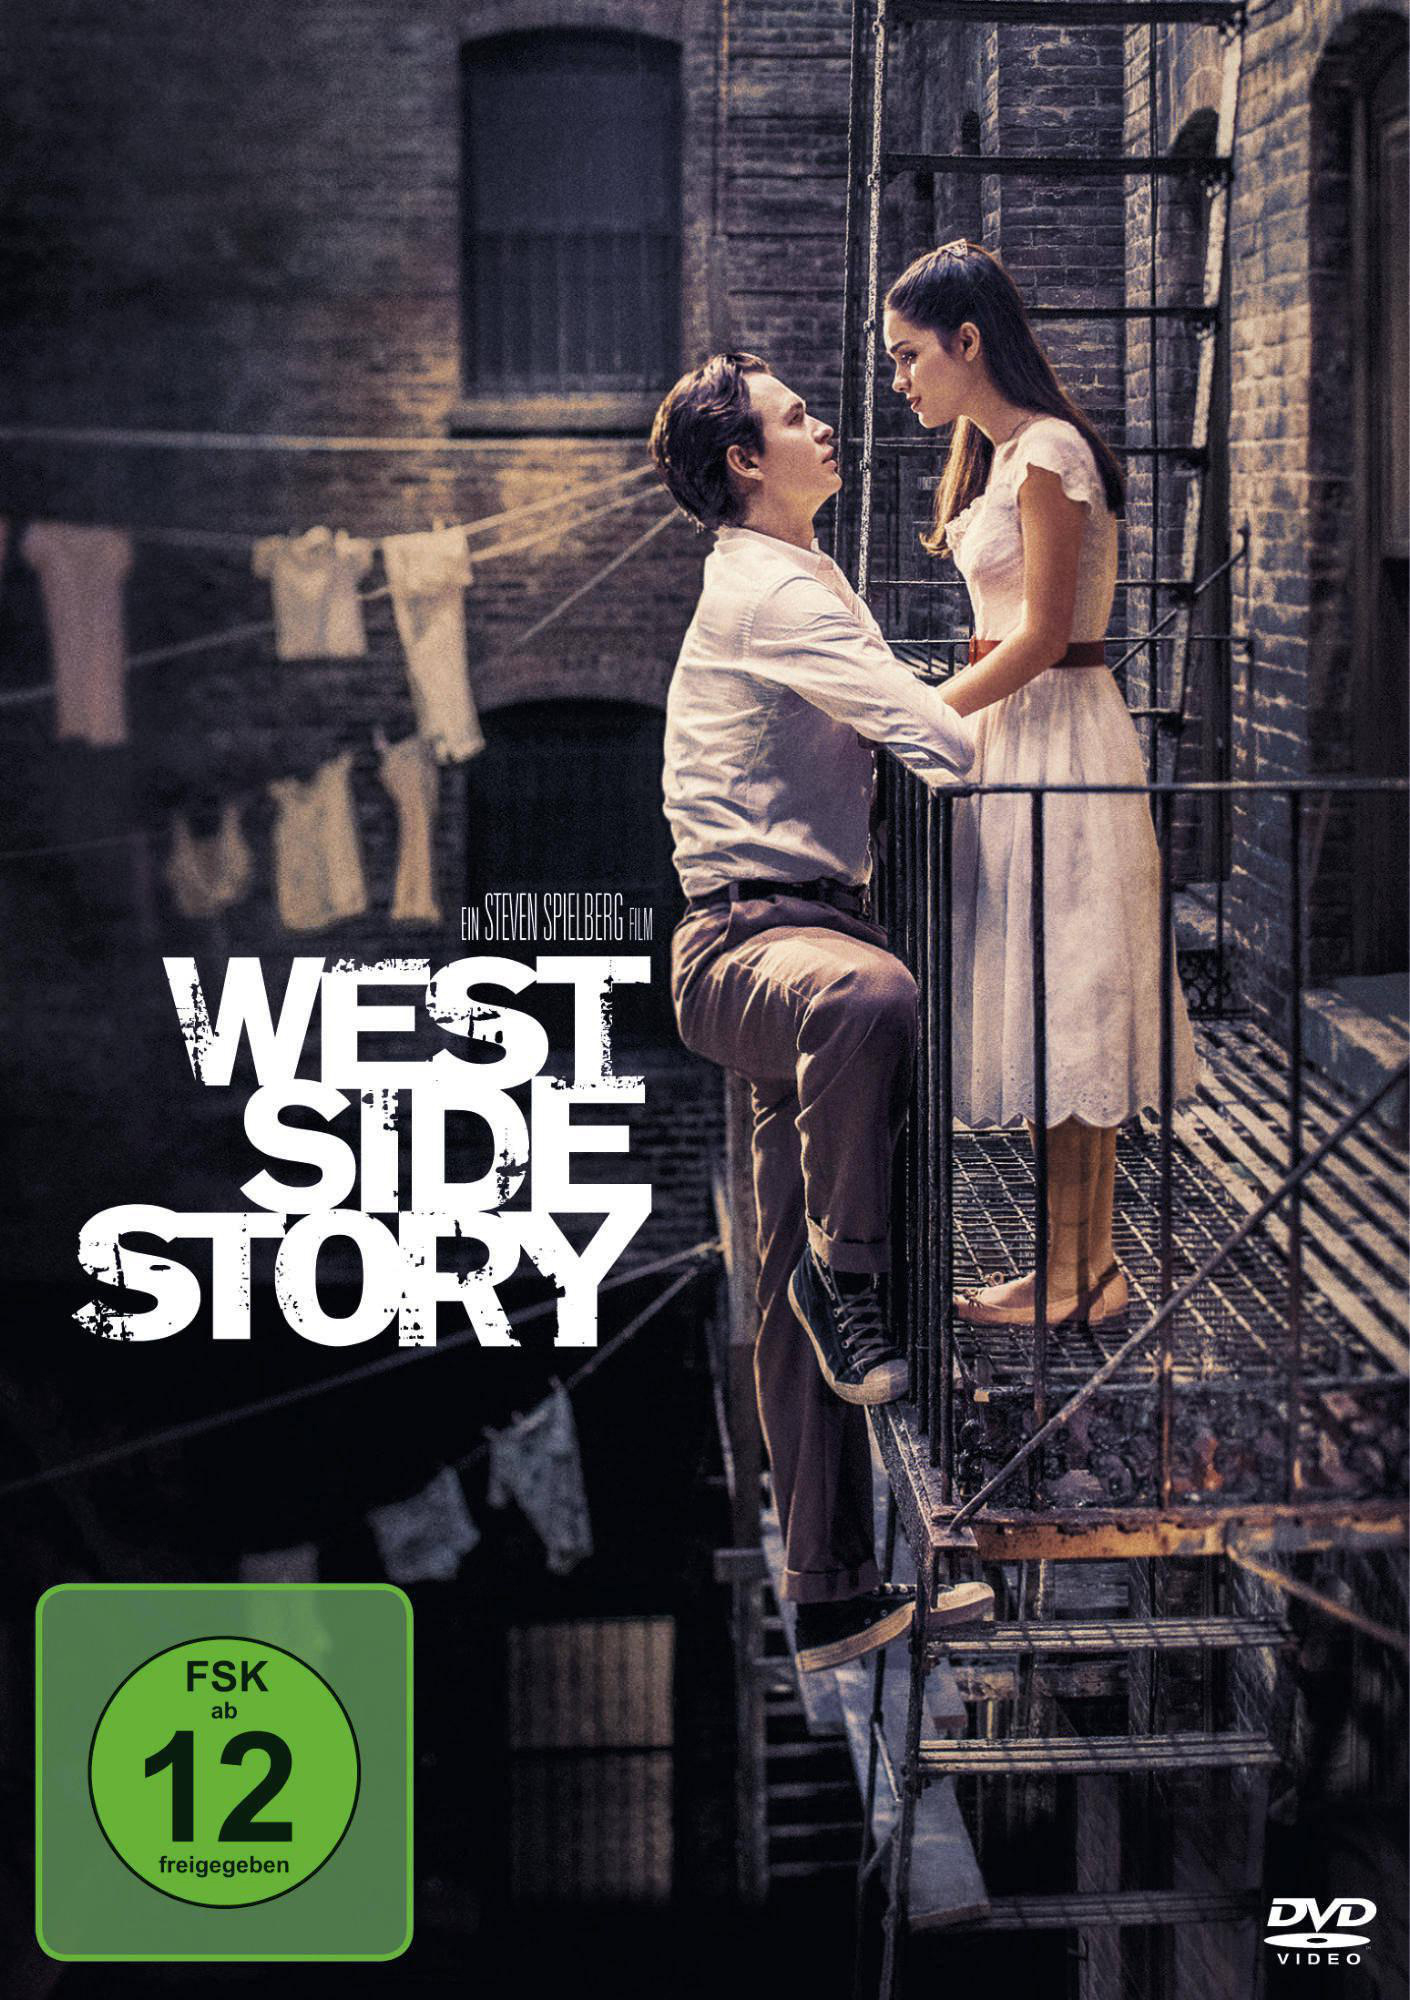 DVD Story Side West